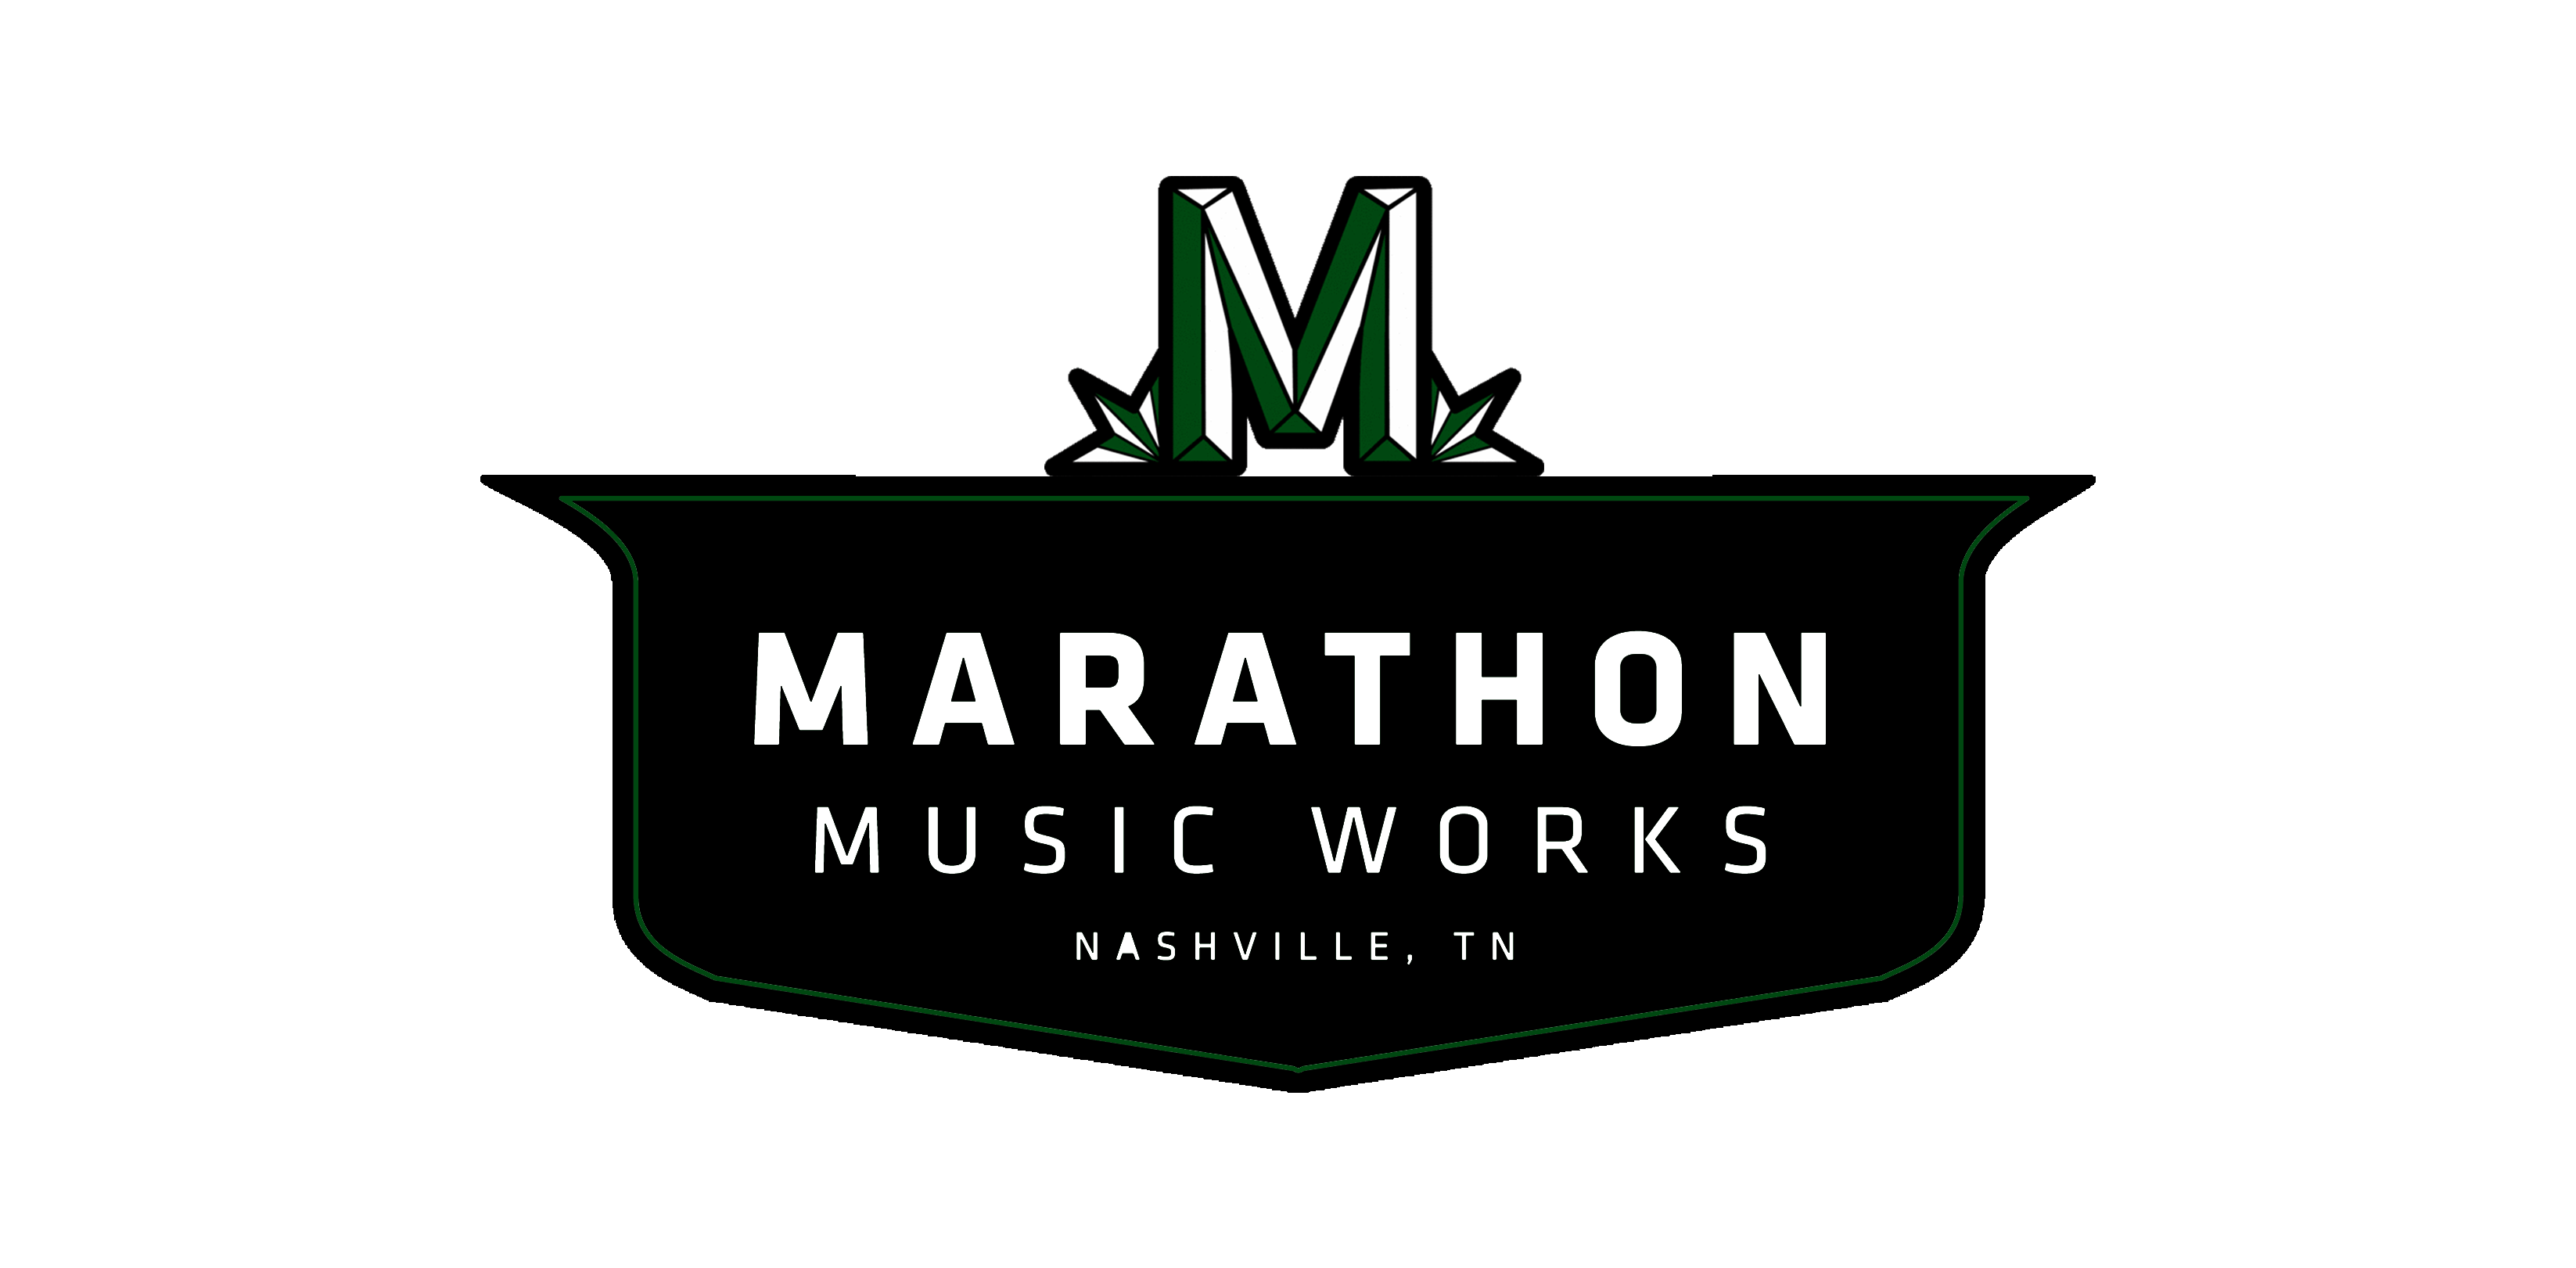 Marilyn Manson Official Logo - Marilyn Manson at Marathon Music Works Official Ticket Exchange